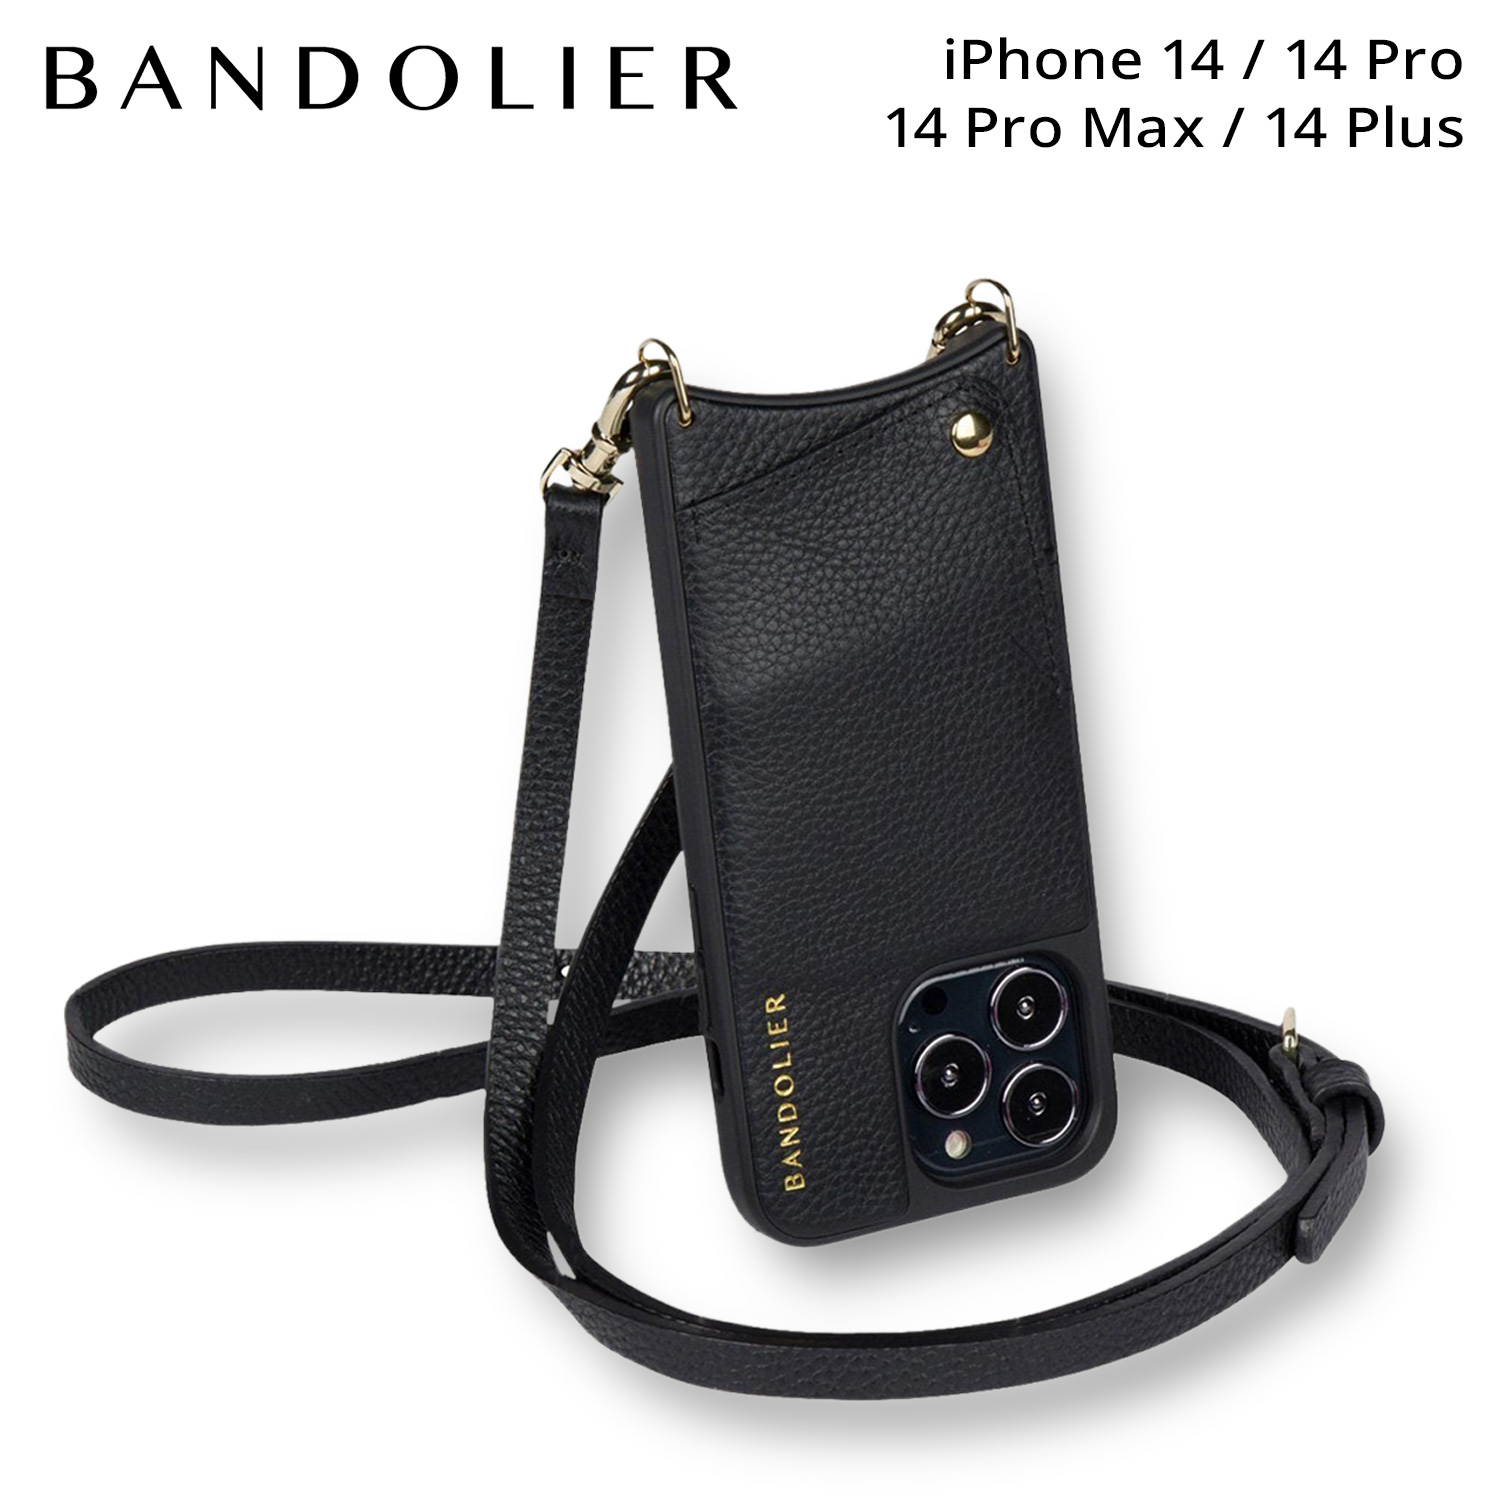 BANDOLIER バンドリヤー iPhone 14 14Pro iPhone 14 Pro Max iPhone 14 Plus ケース  スマホケース 携帯 ショルダー アイフォン